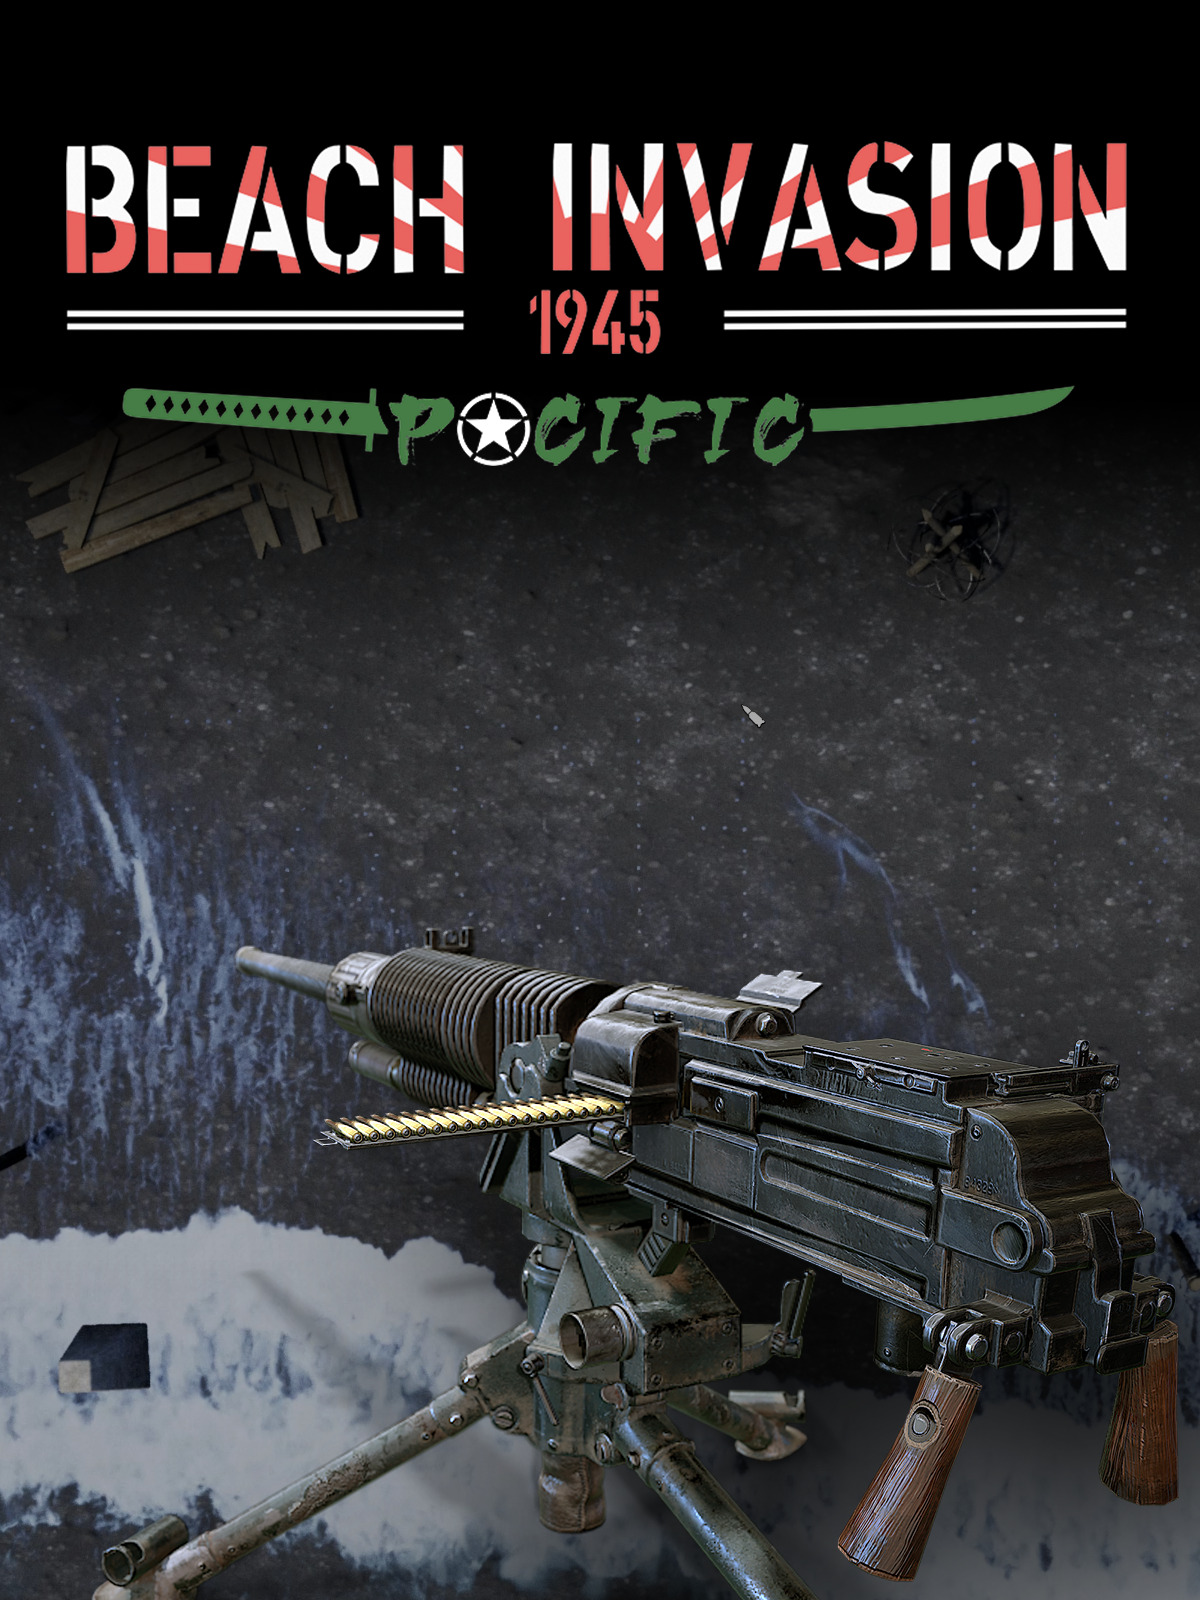 Beach Invasion 1945 - Pacific - Metacritic